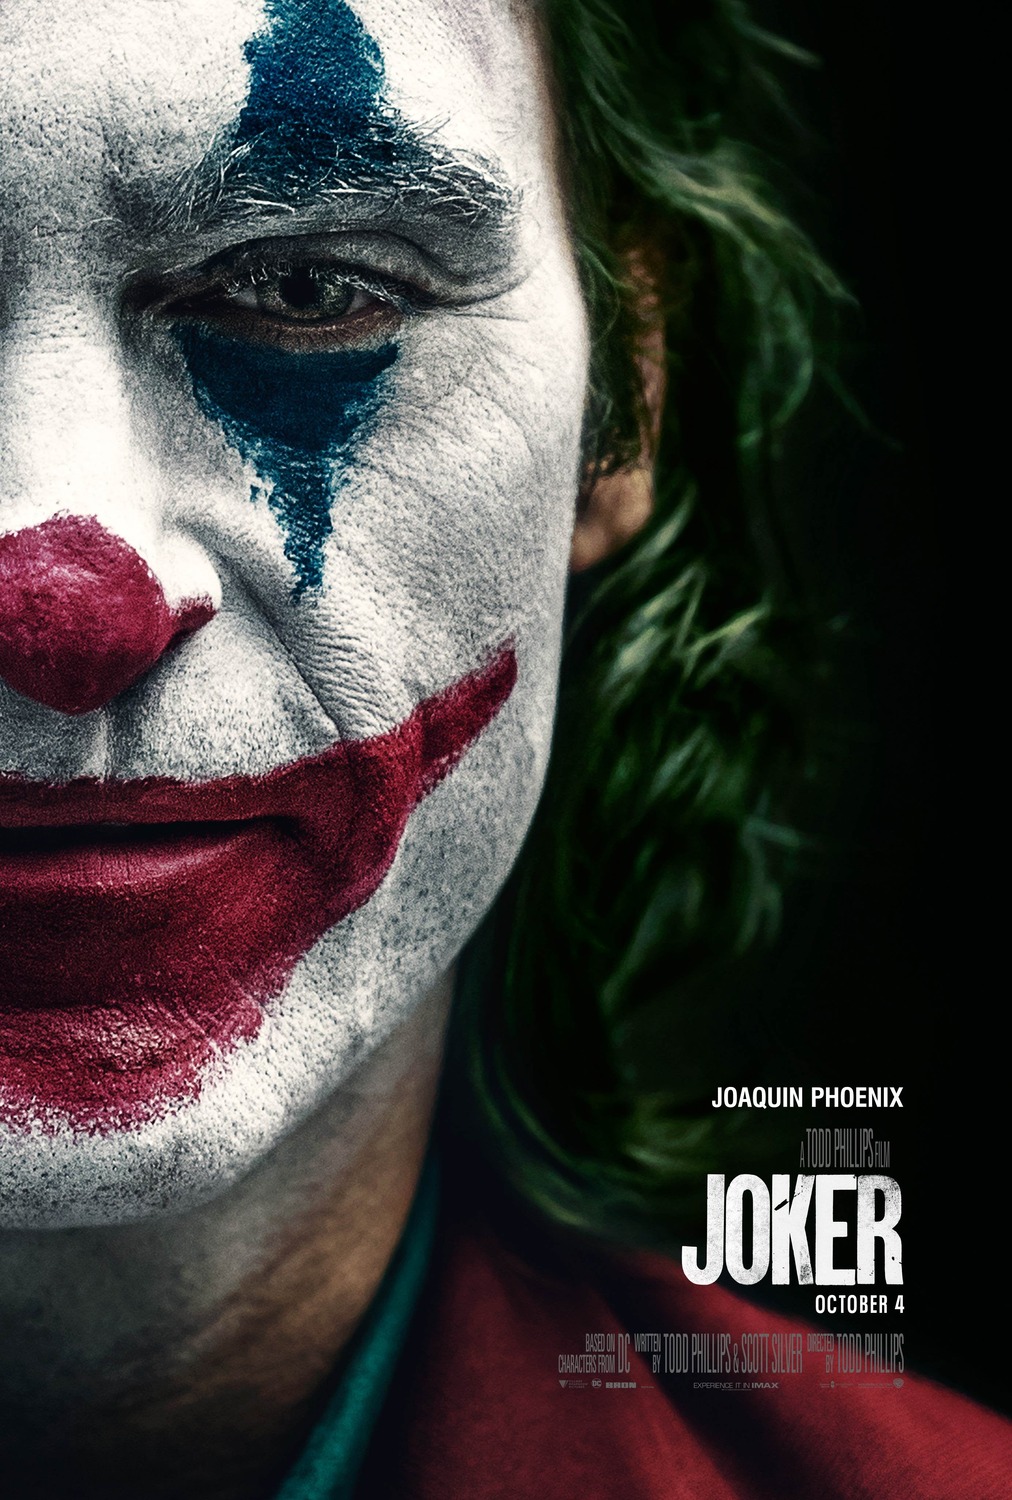 Film Review: Joker – A Maniac Masterpiece